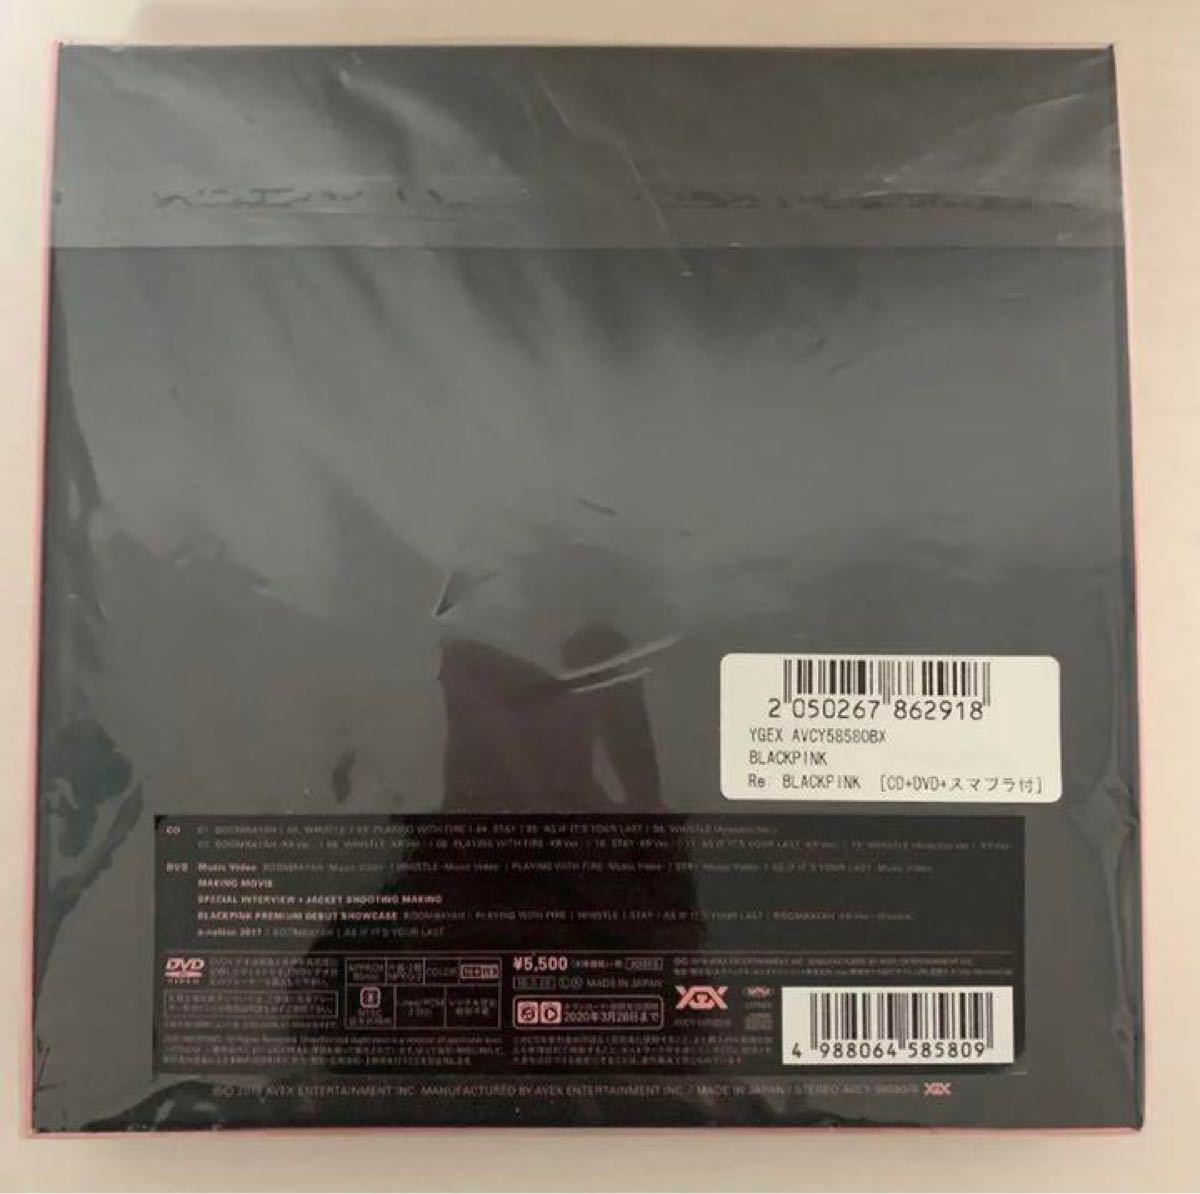 Re: BLACKPINK ［CD+DVD］＜初回限定仕様＞